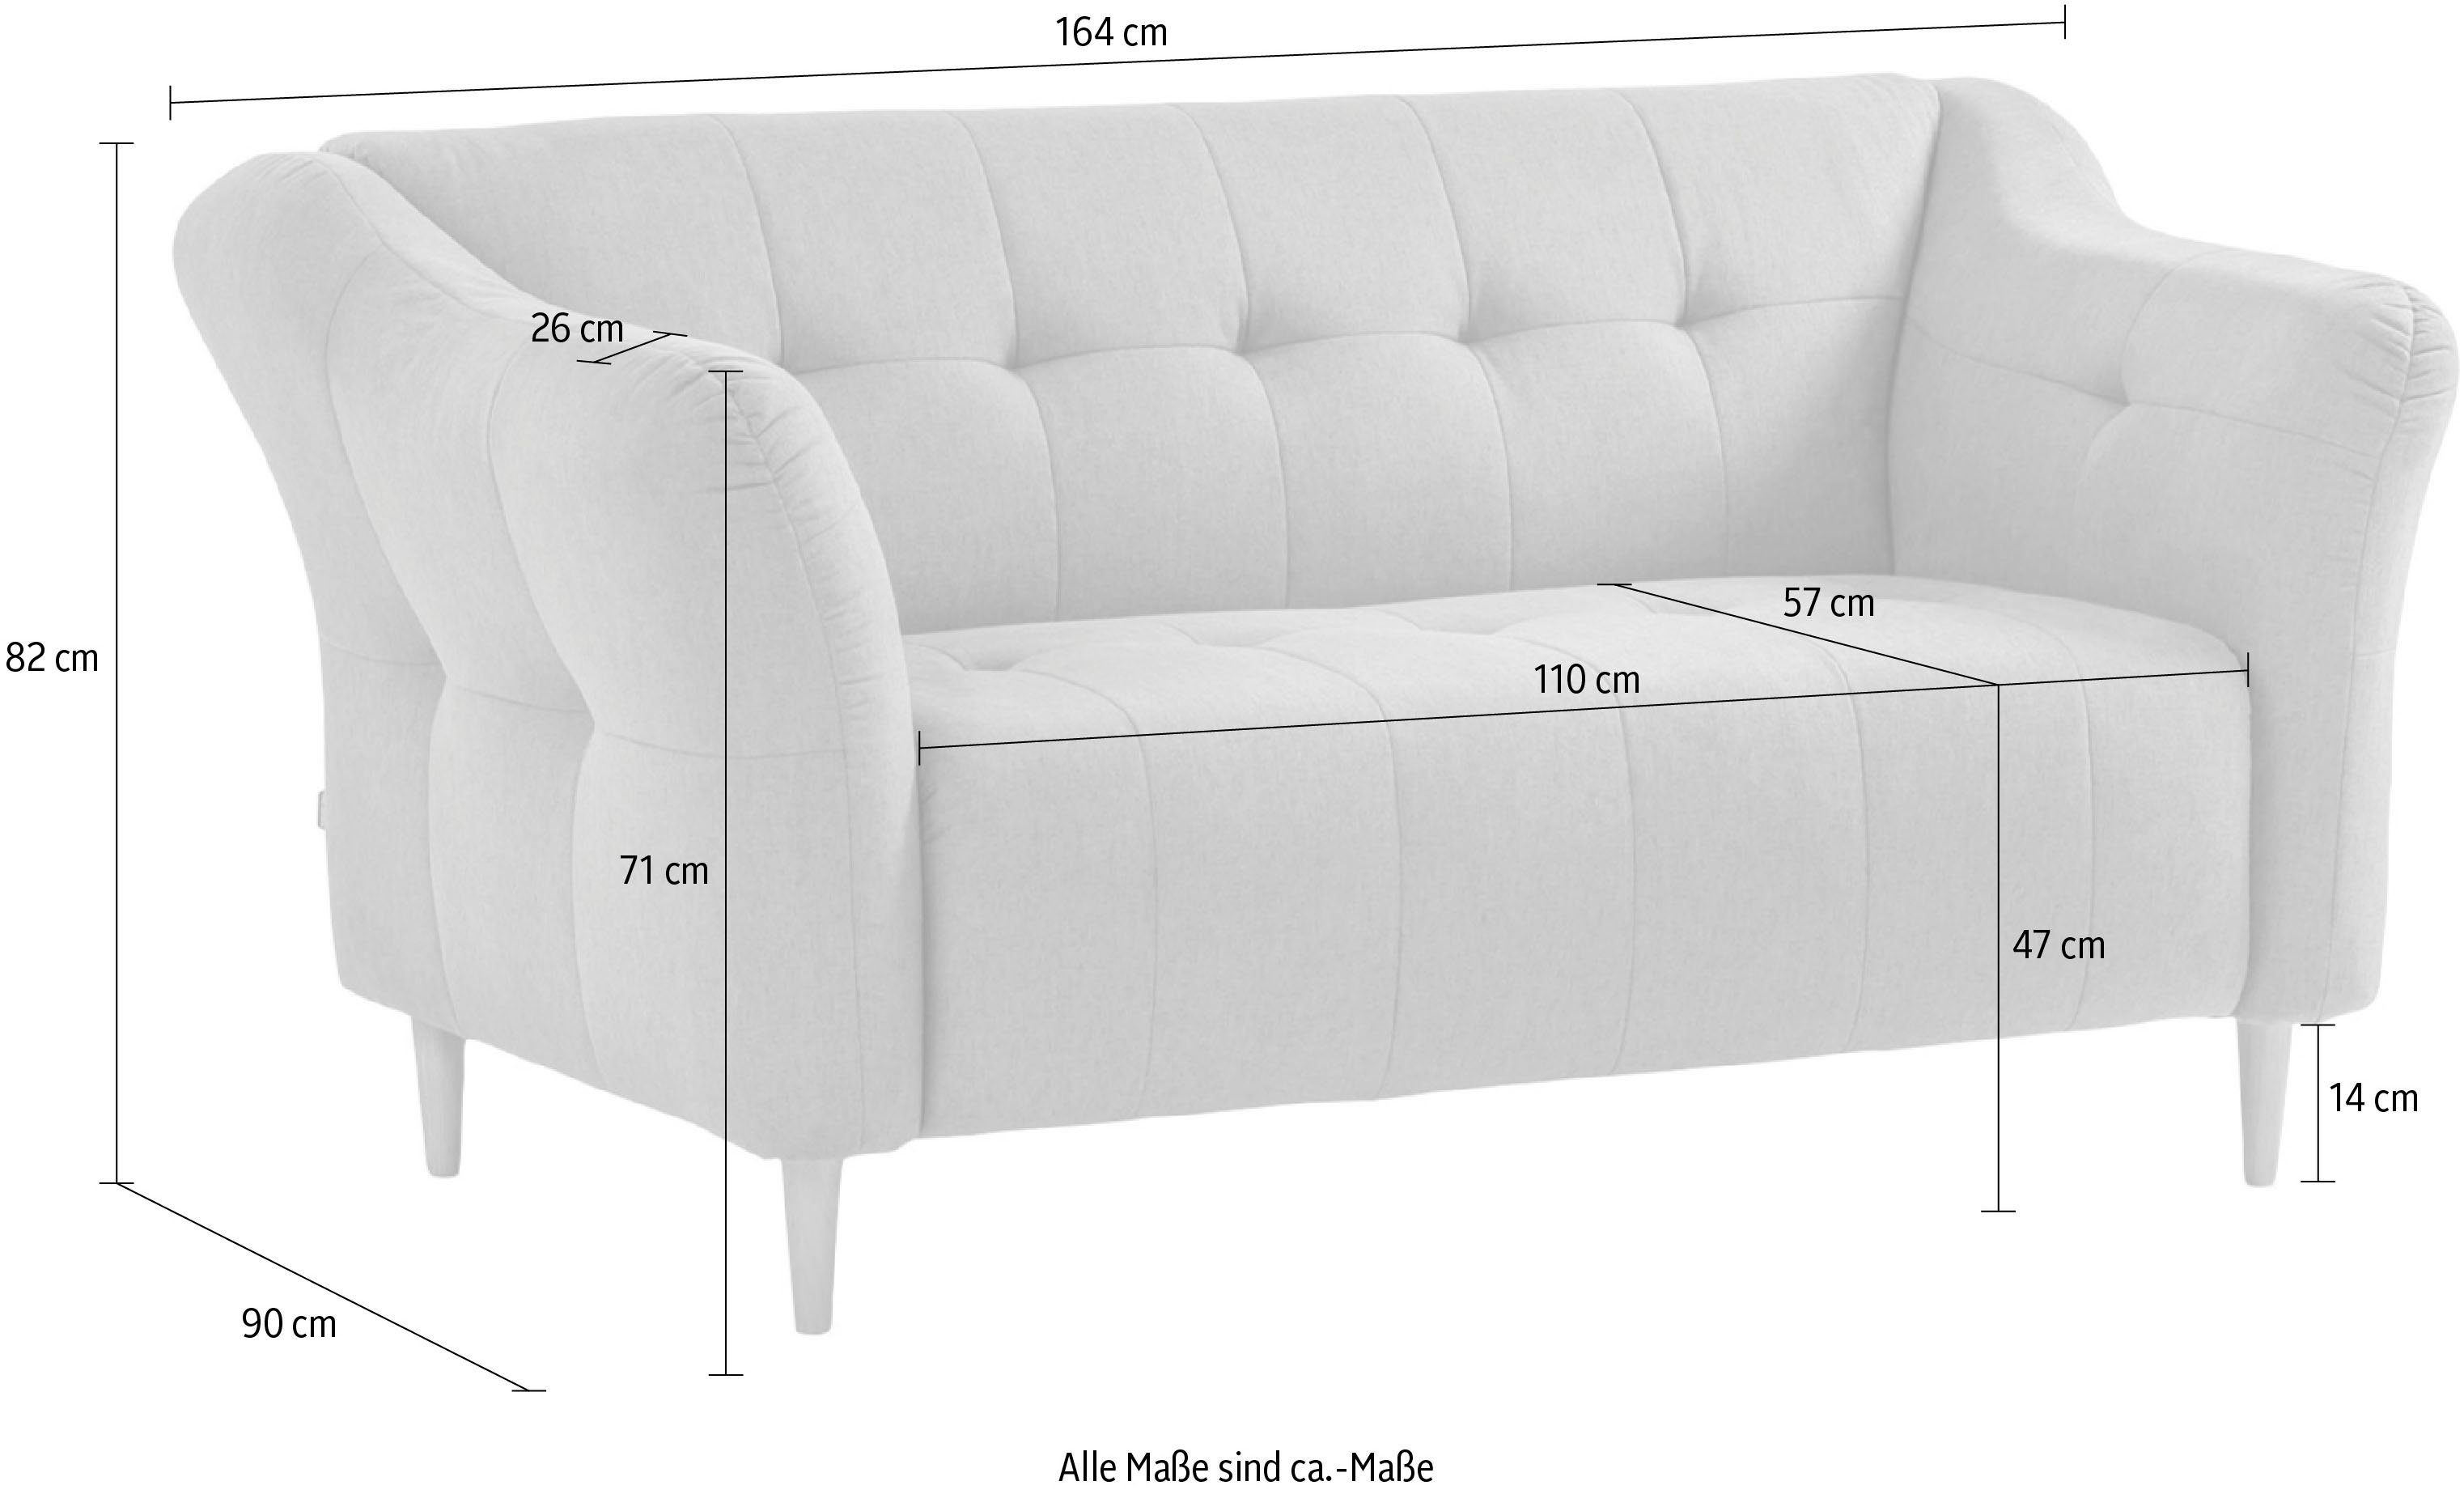 stellbar Soraya, Holzfüßen, fashion frei sofa mit exxpo - Raum im 2-Sitzer